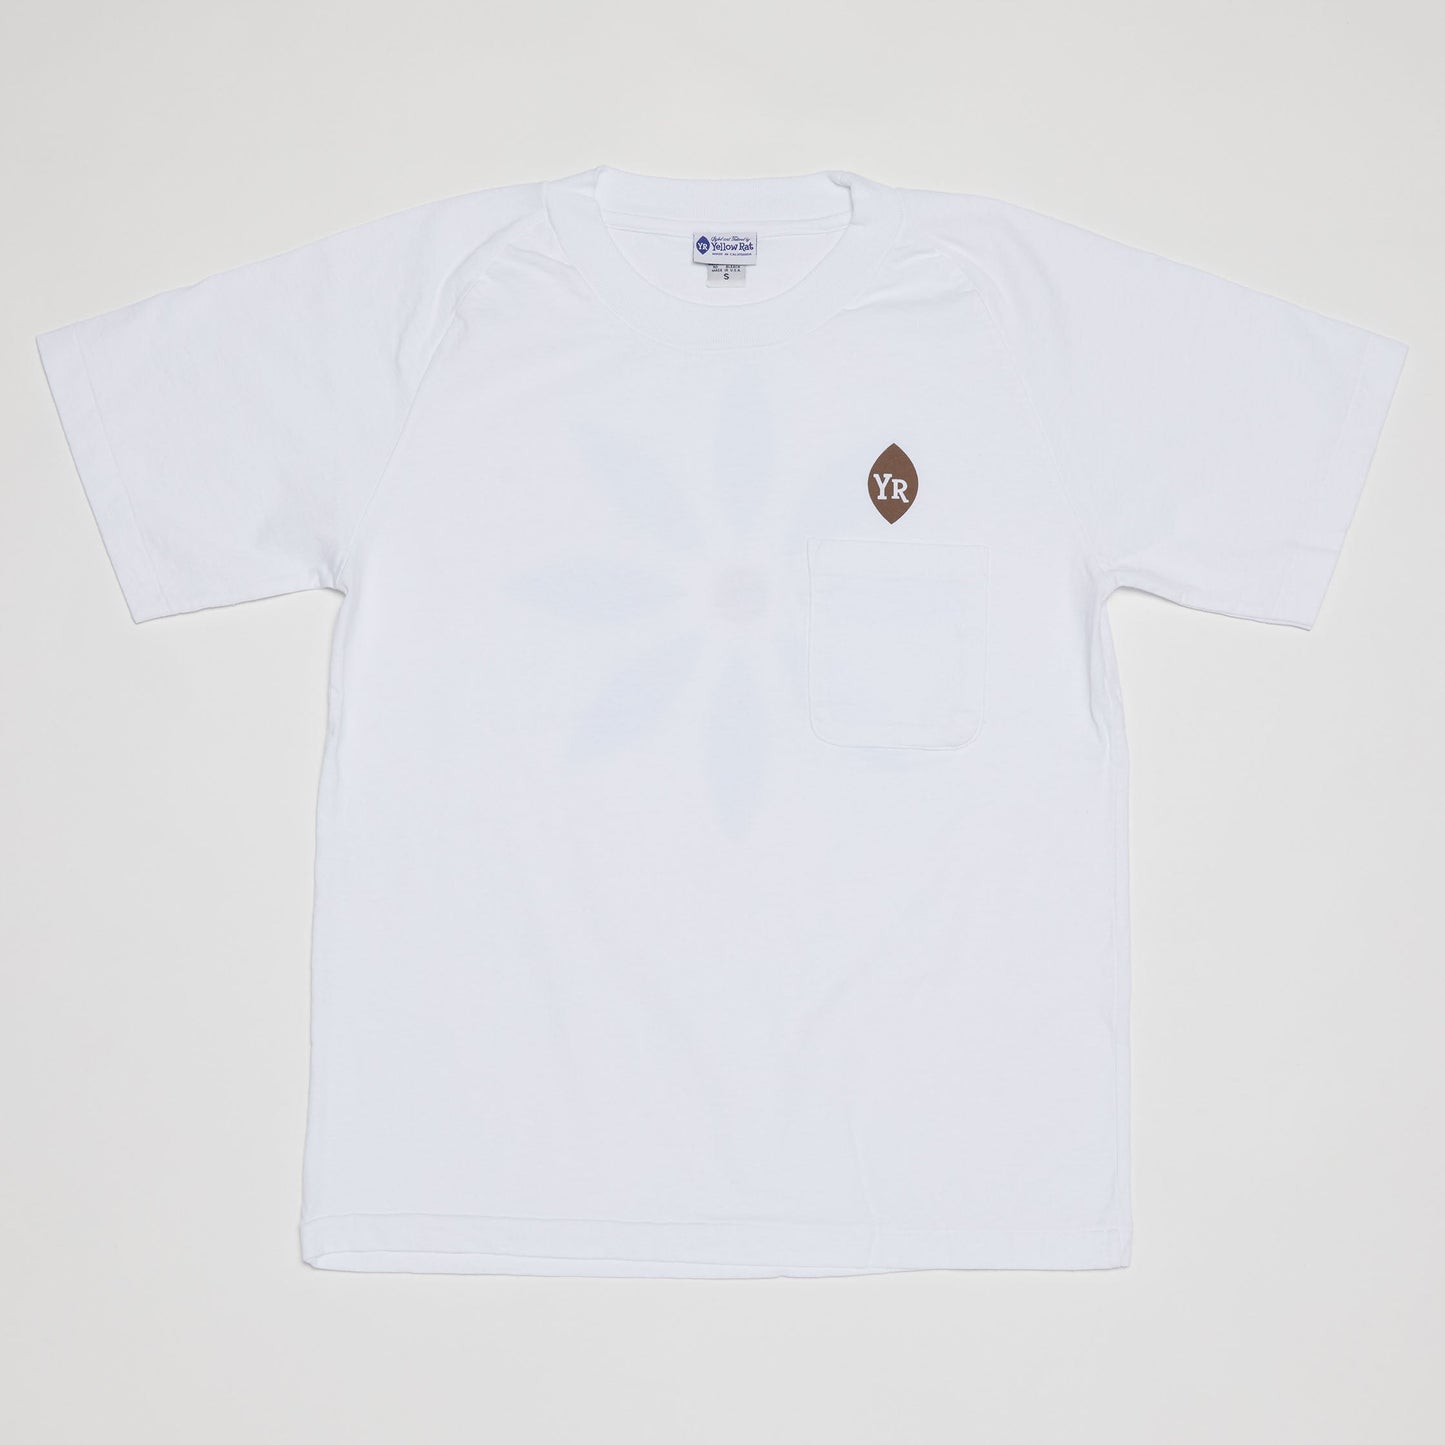 YR Flower T-Shirt (White)